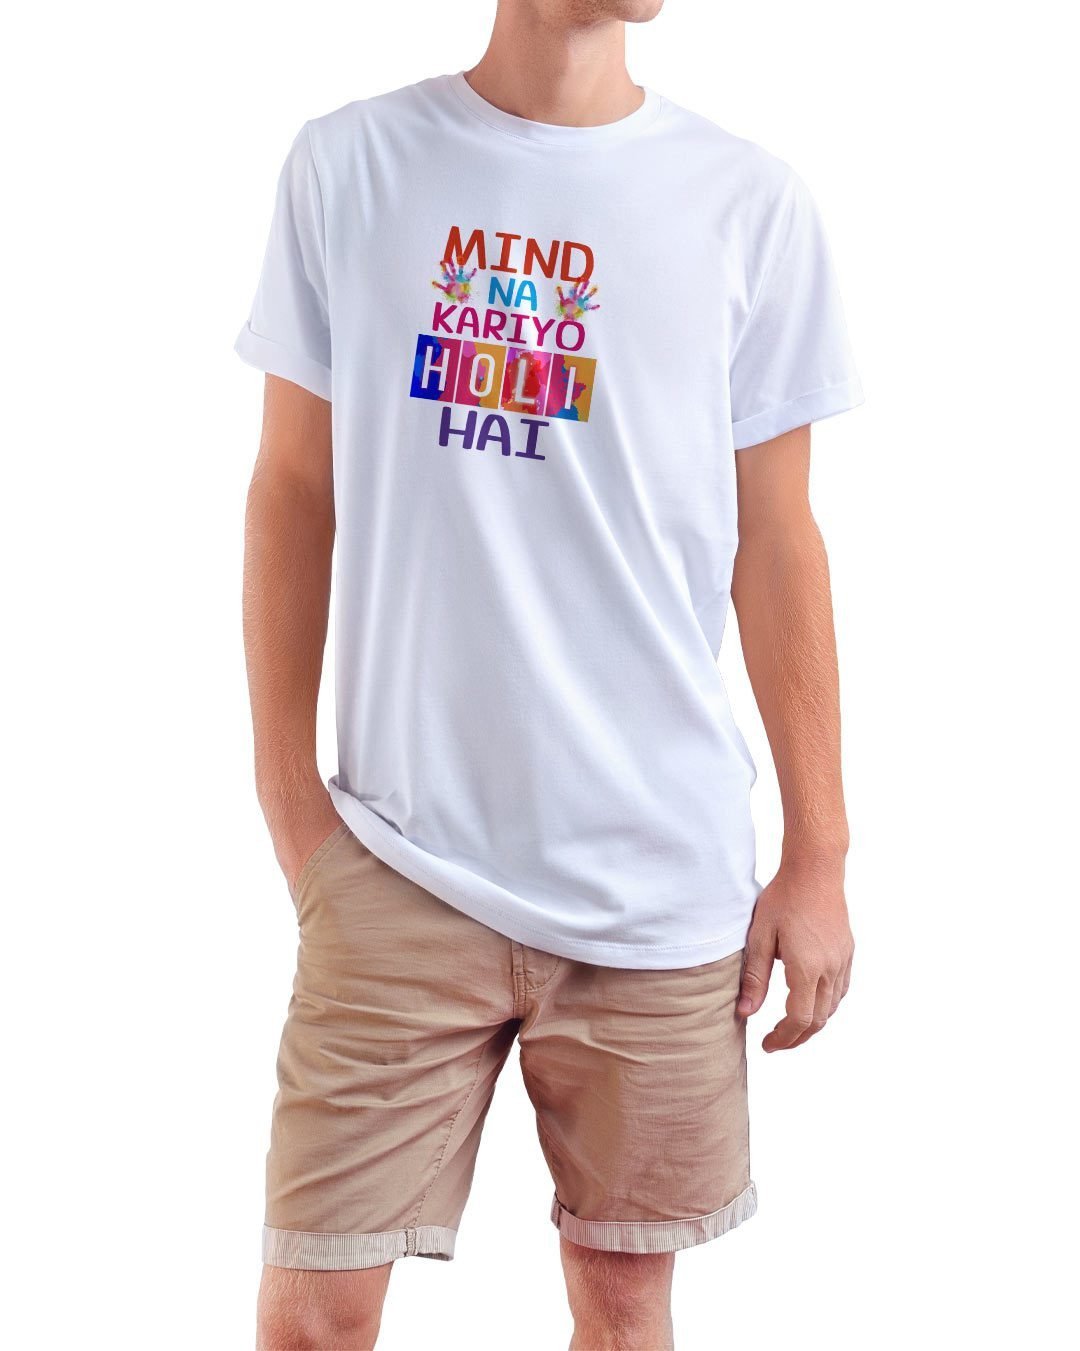 TeesWarrior Holi Graphic Printed Polyester T-Shirt – Regular Fit, Round Neck, Half Sleeves